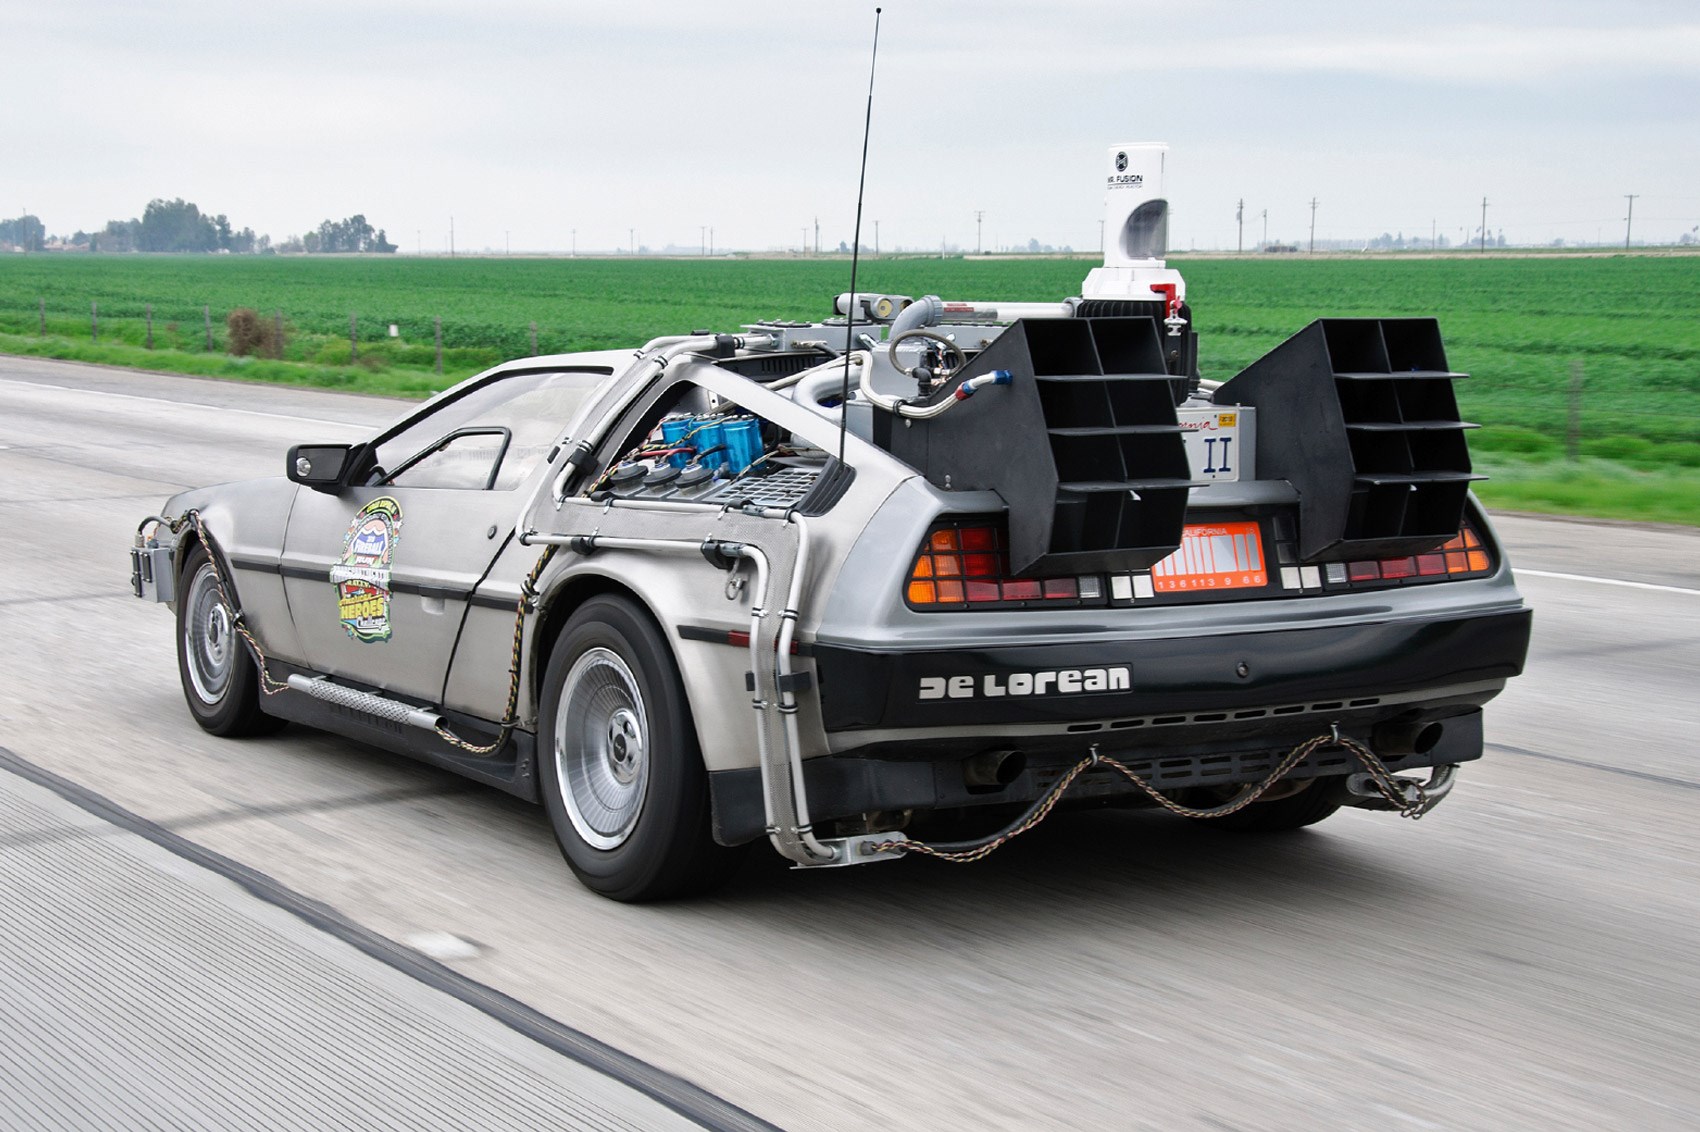 DeLorean goes back to the future to reproduce DMC-12 car